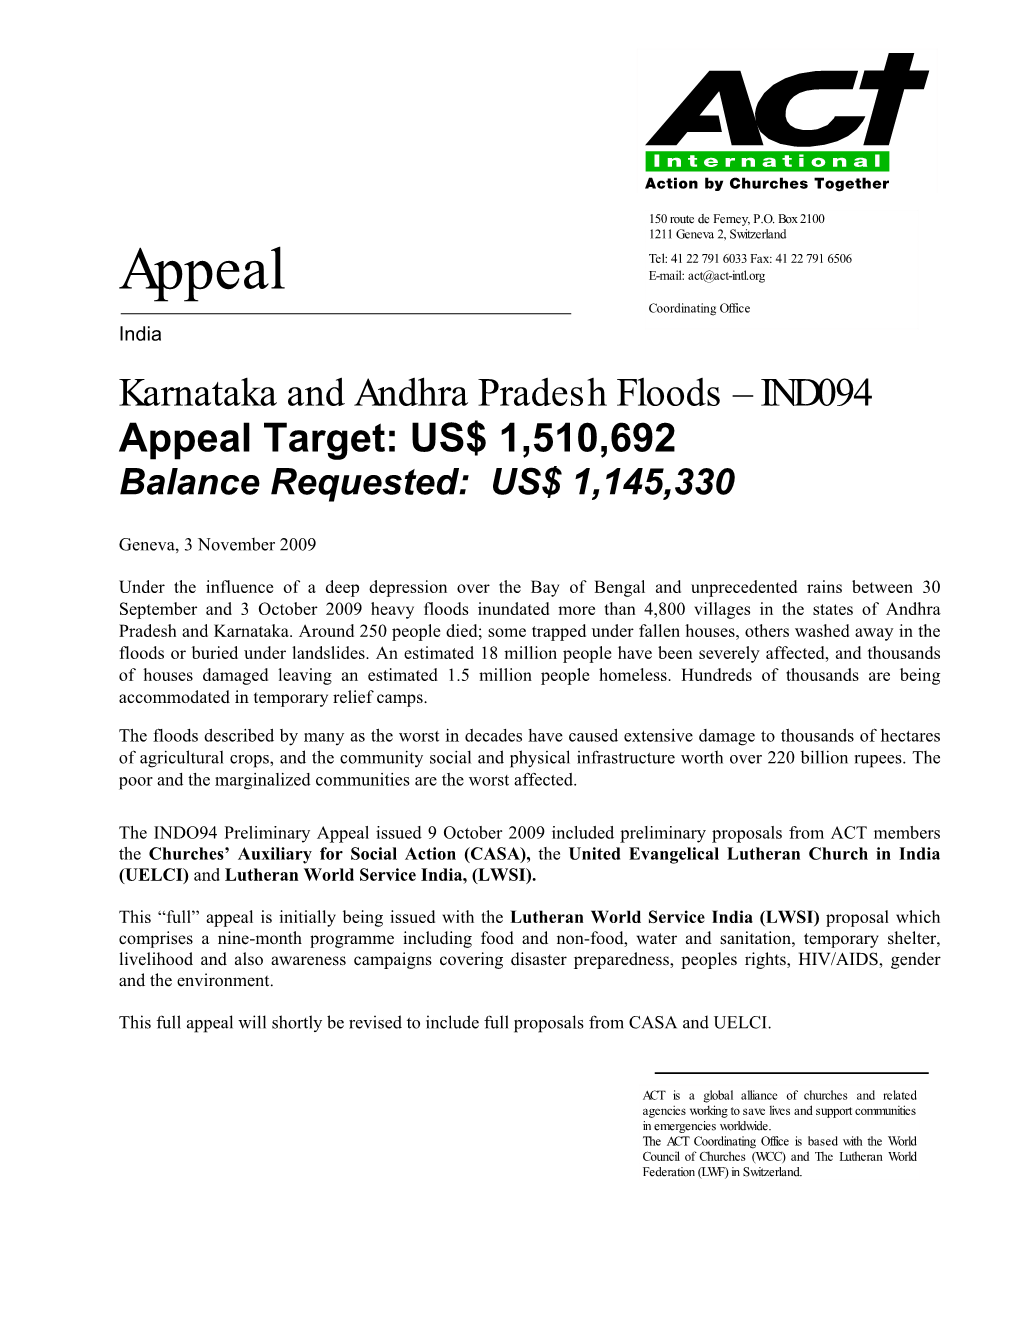 Karnataka and Andhra Pradesh Floods – IND094 Appeal Target: US$ 1,510,692 Balance Requested: US$ 1,145,330